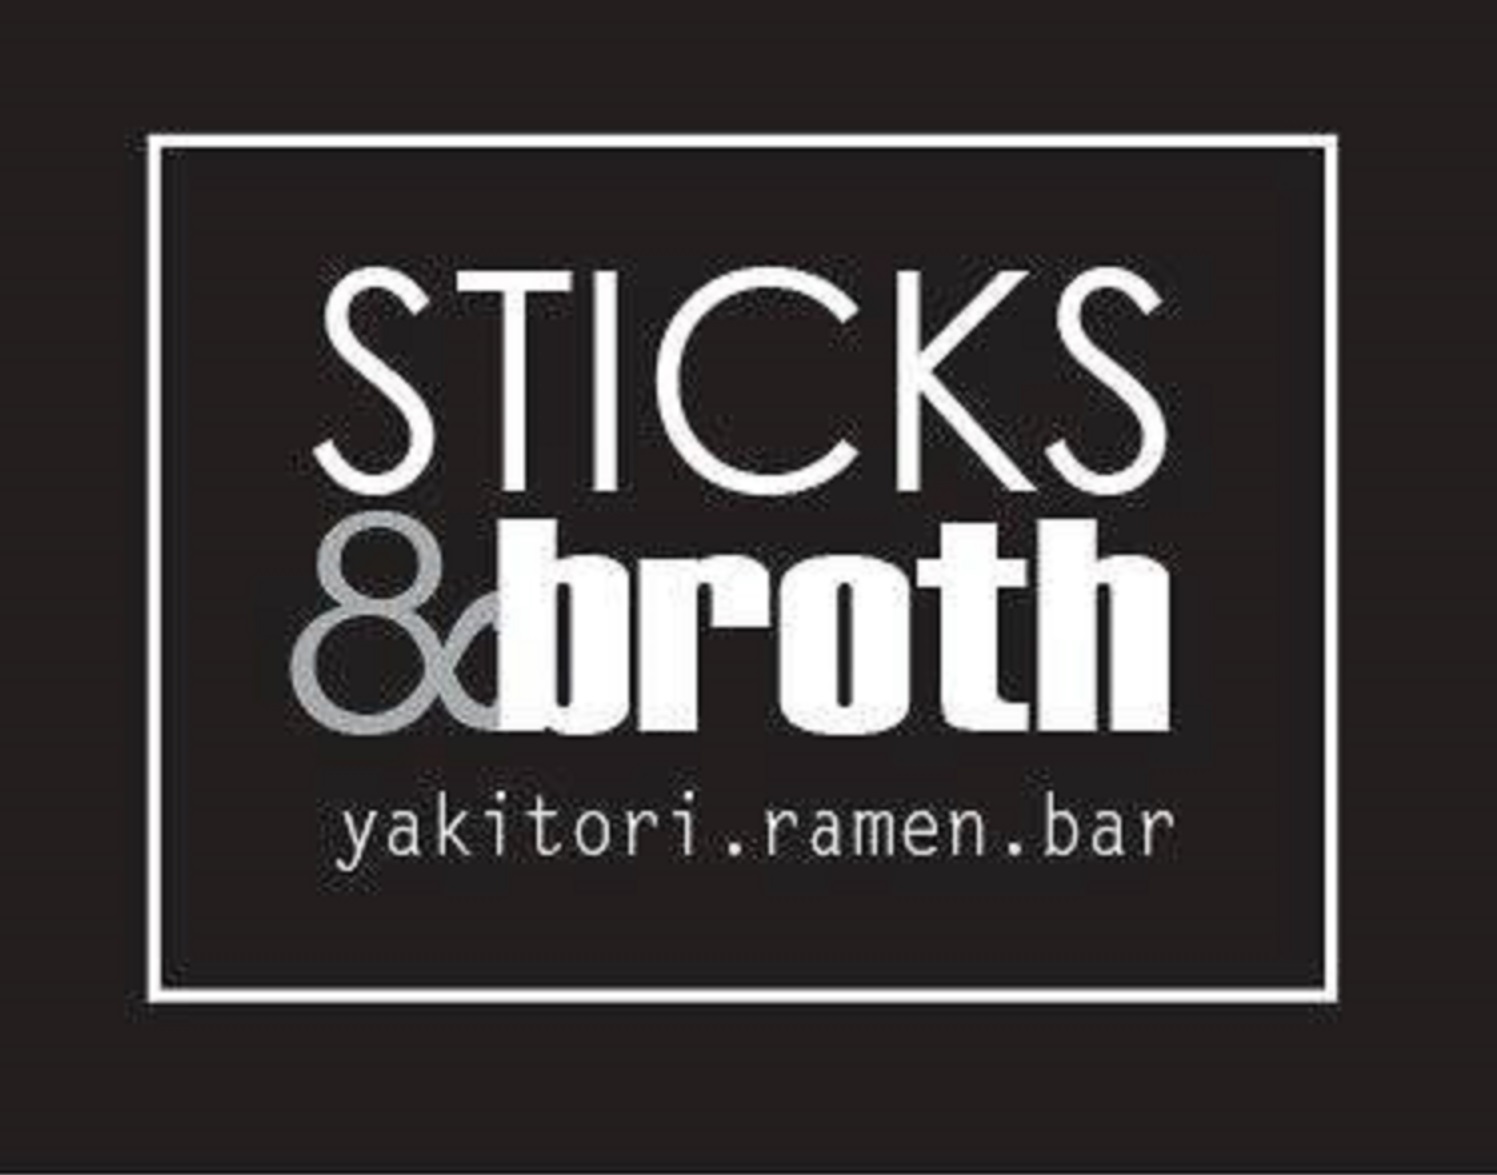 Sticks & Broth - Stokes Croft